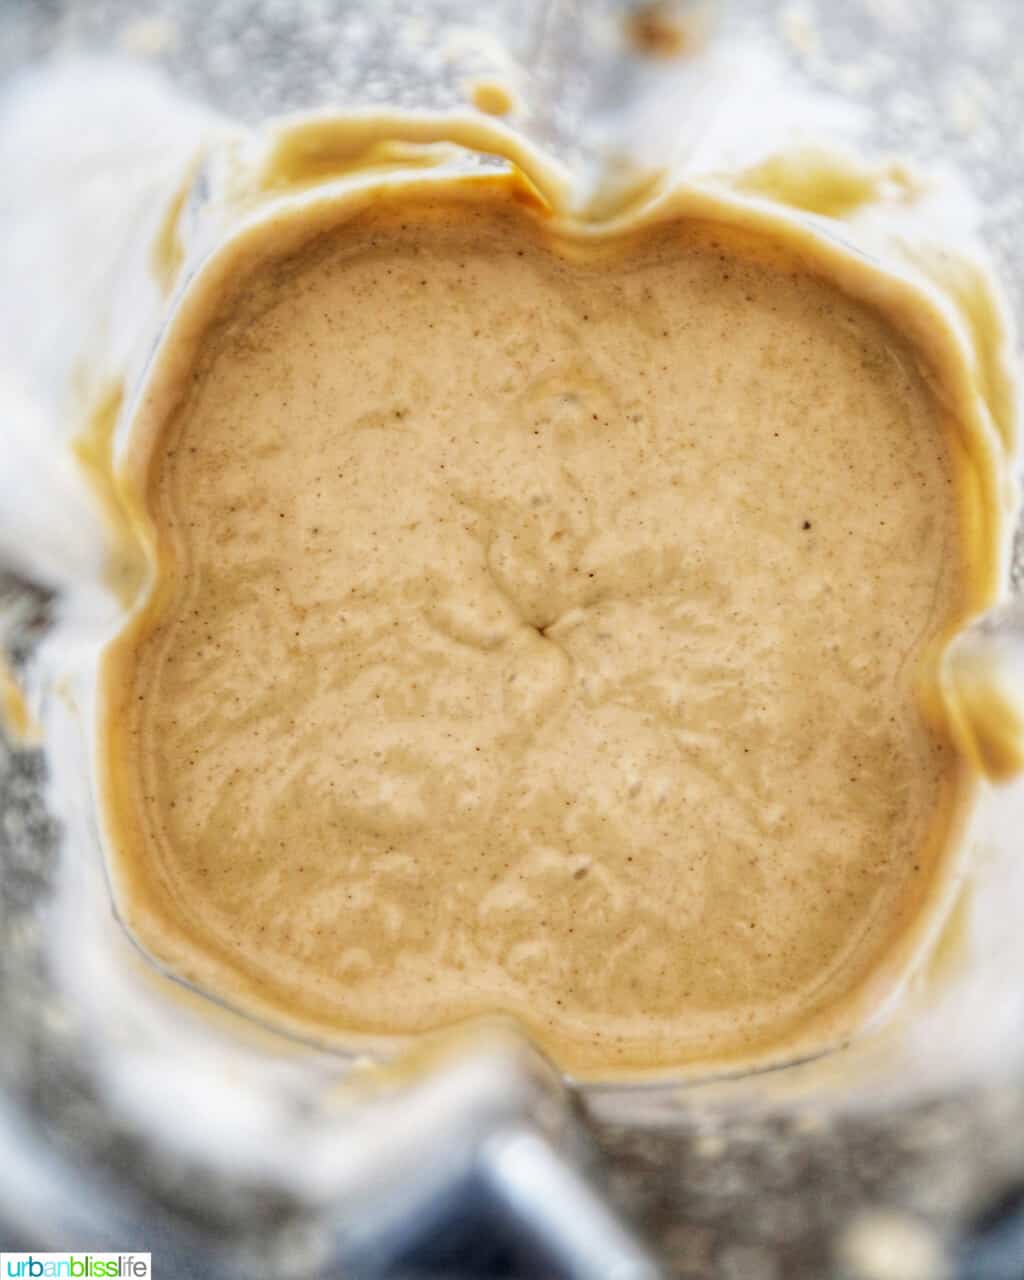 ingredients to make frozen peanut butter banana dog treats blended in blender